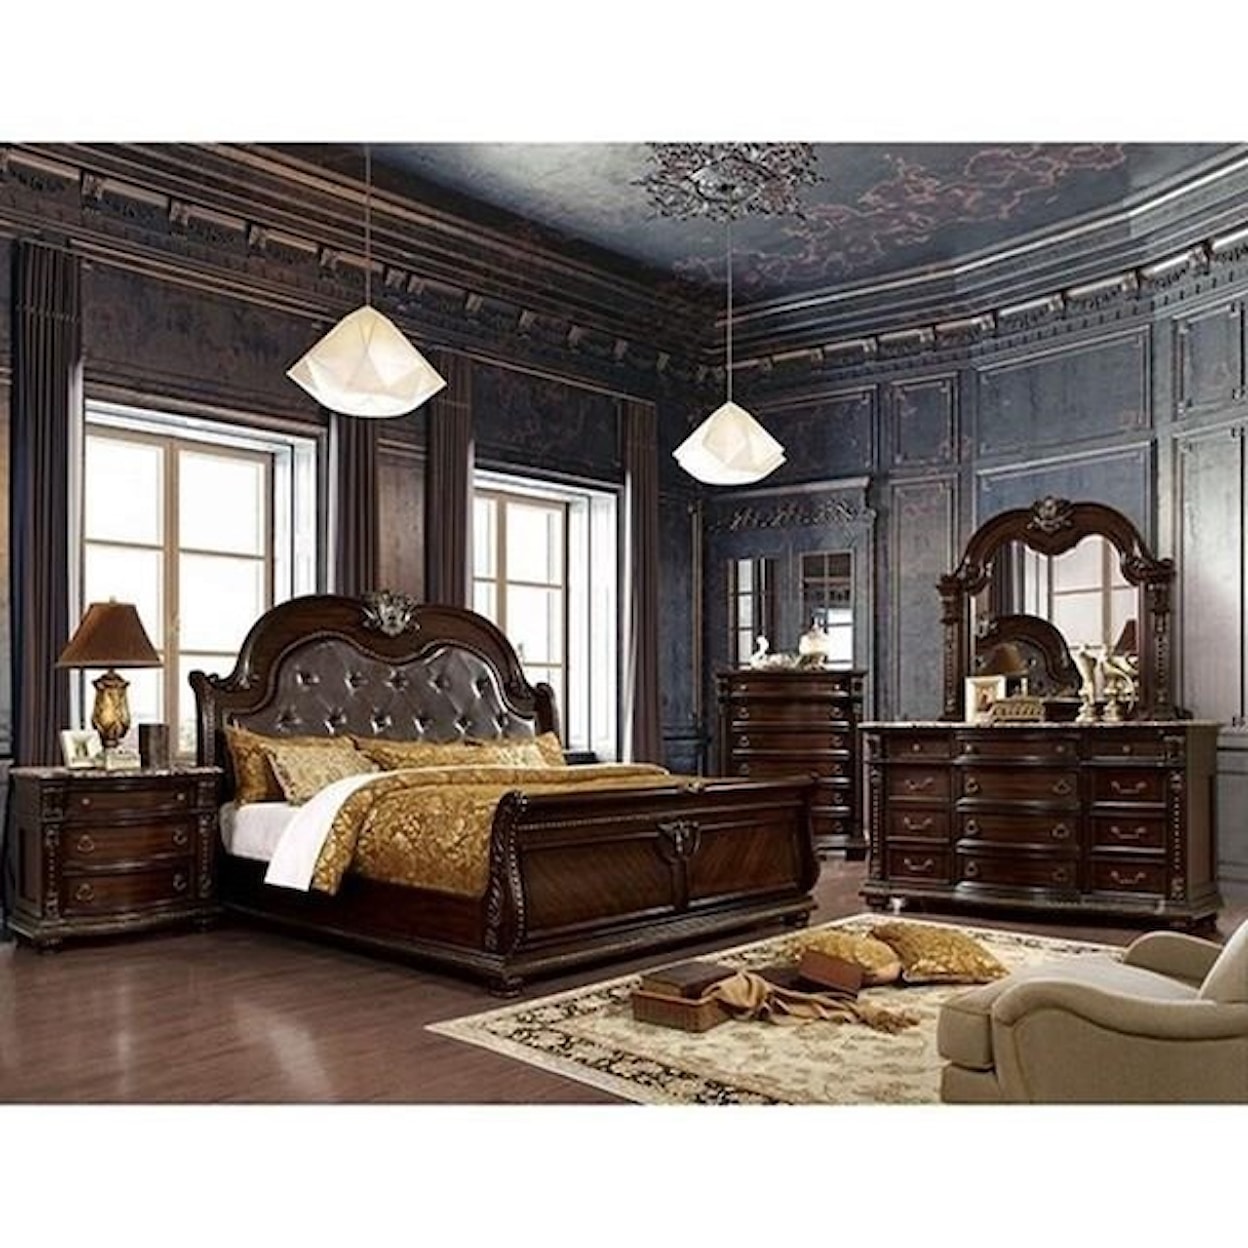 Furniture of America Fromberg Queen Bedroom Group